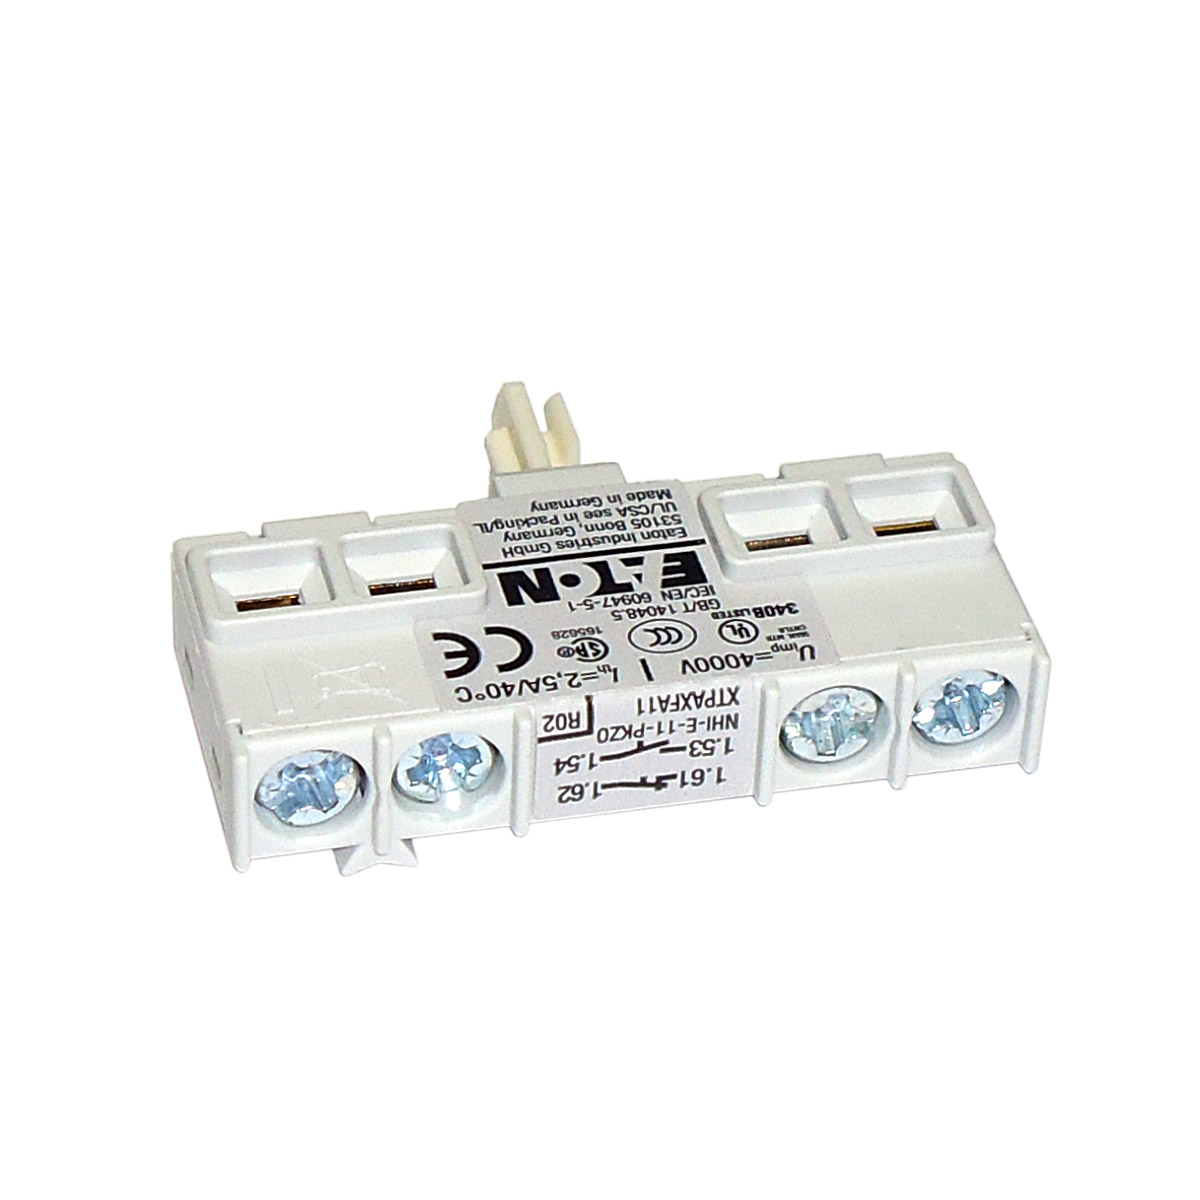 Eaton normal interruptor auxiliares nhi-e-11-pkz0 interruptor auxiliares bloques 082882 